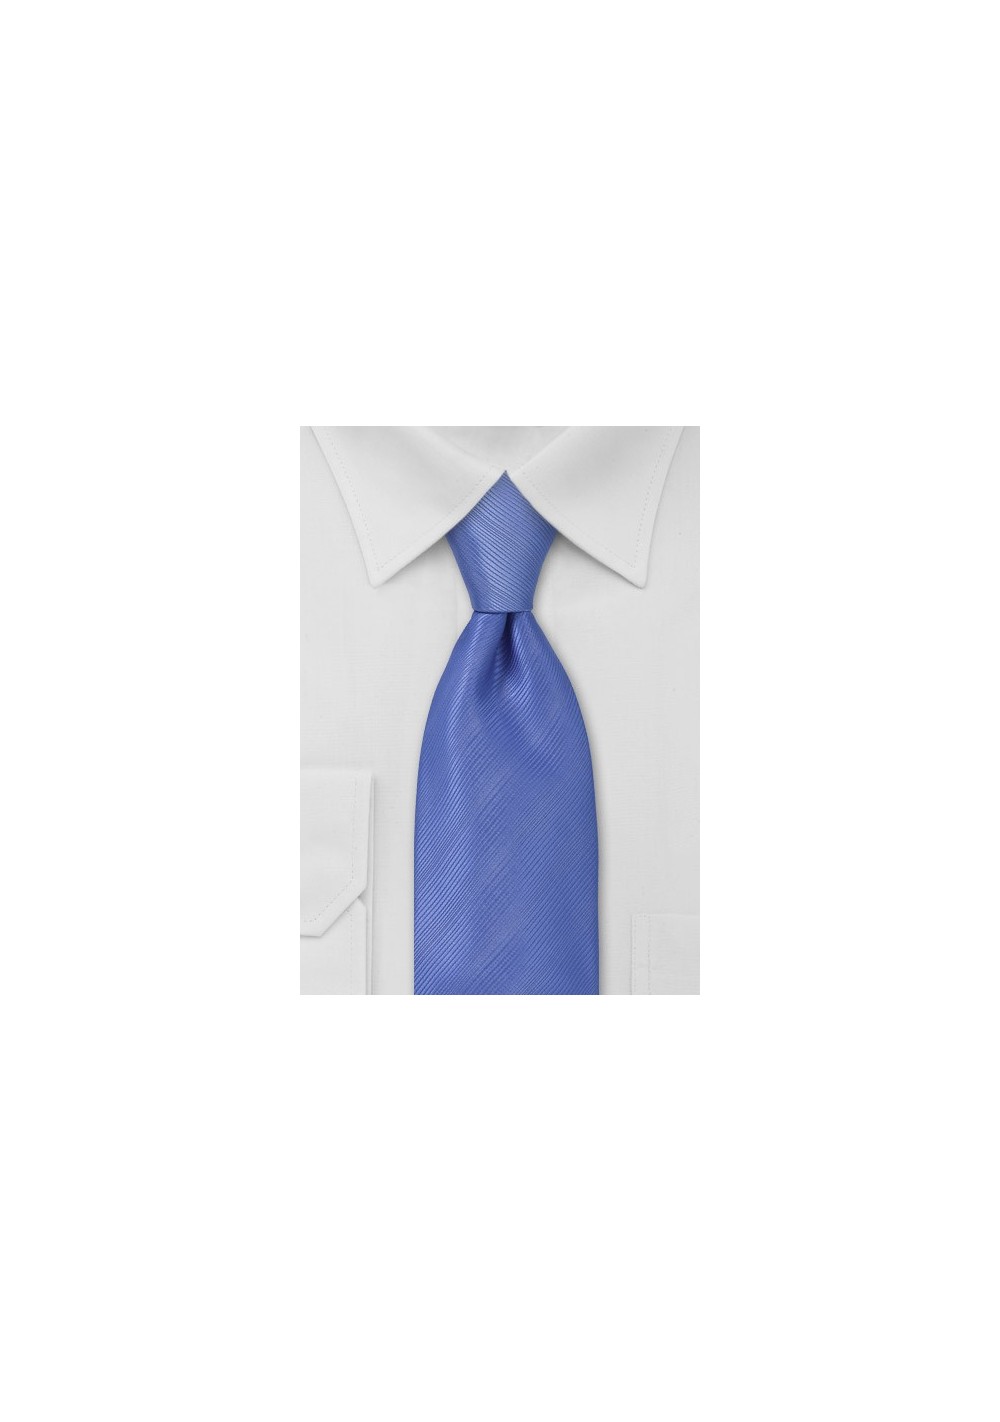 Solid Periwinkle Blue Necktie